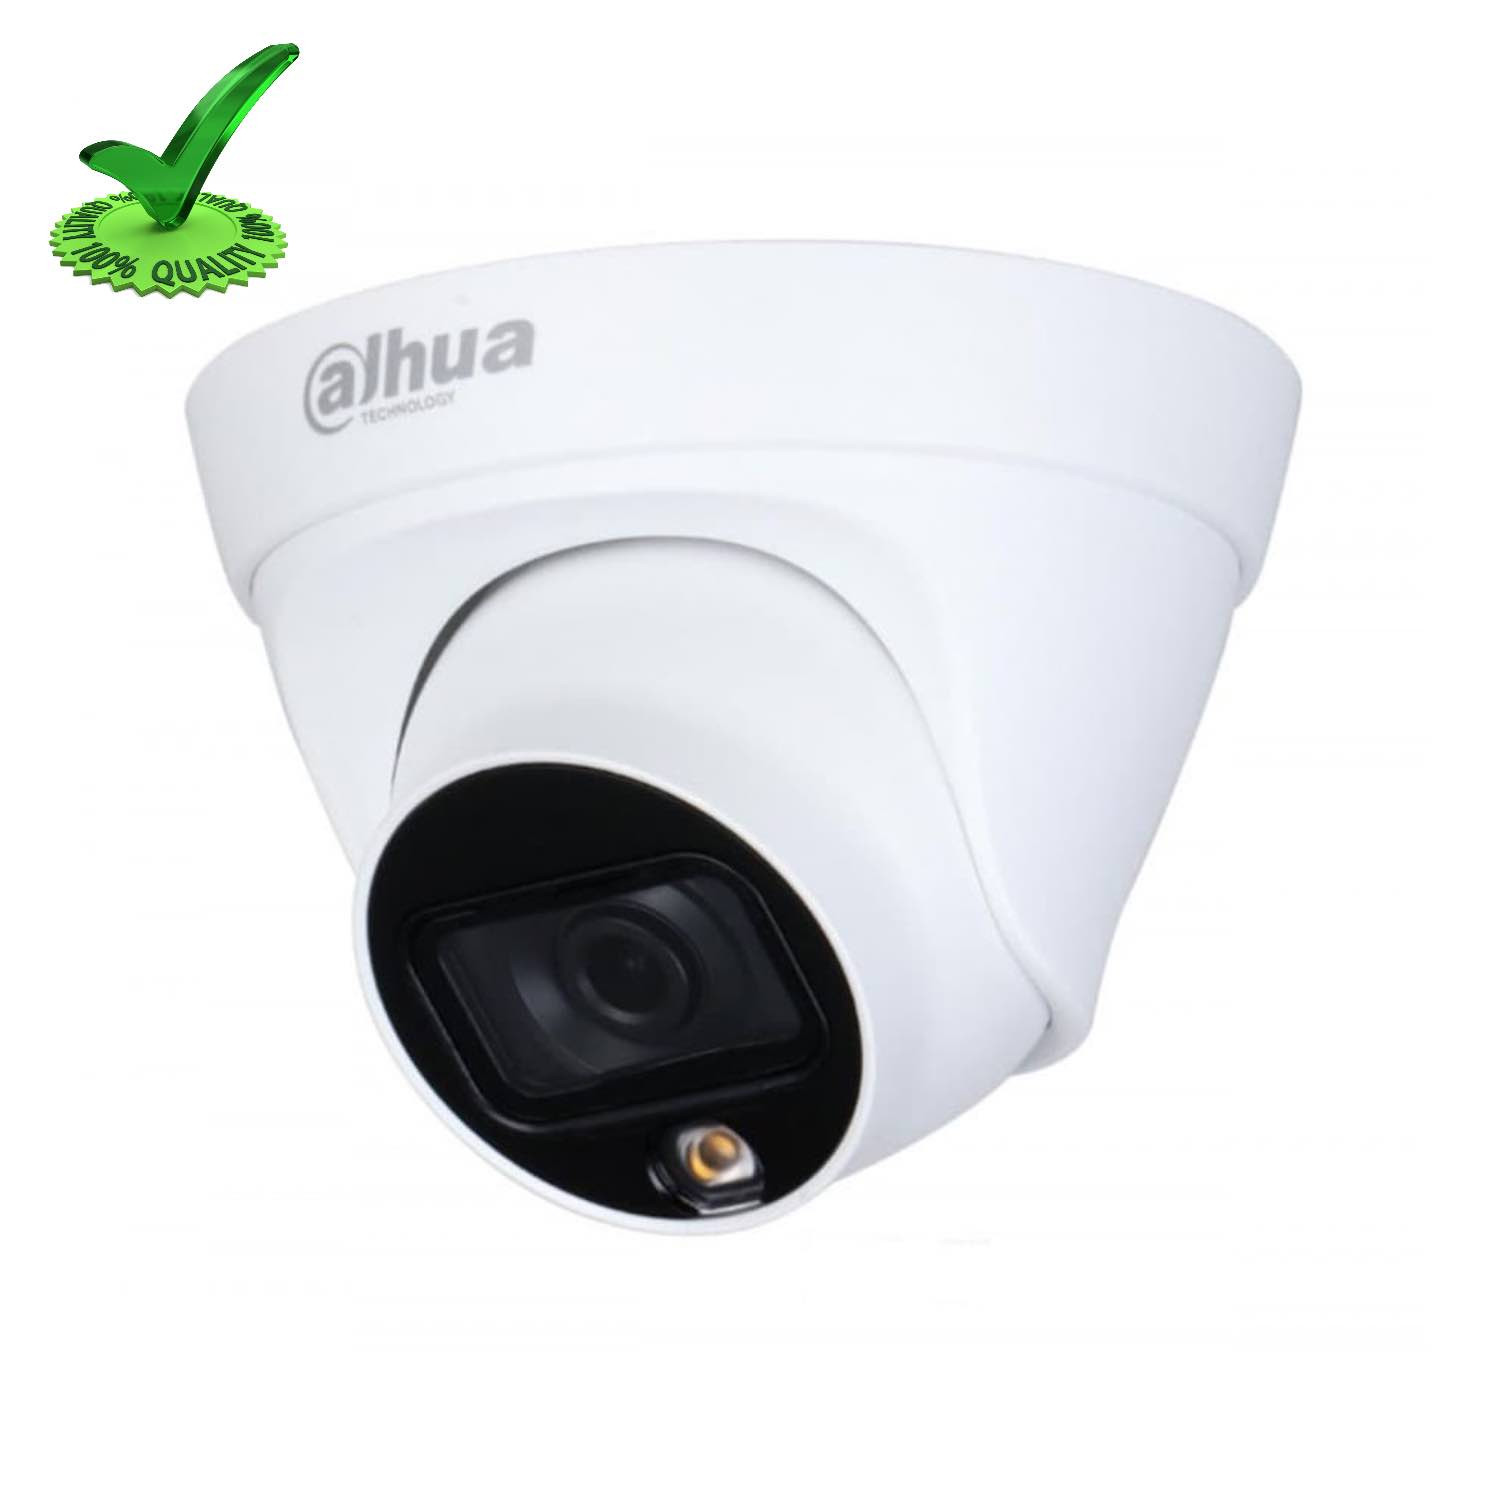 Dahua DH-IPC-HDW1239T1P-LED-S4 2MP IP Network Dome Camera